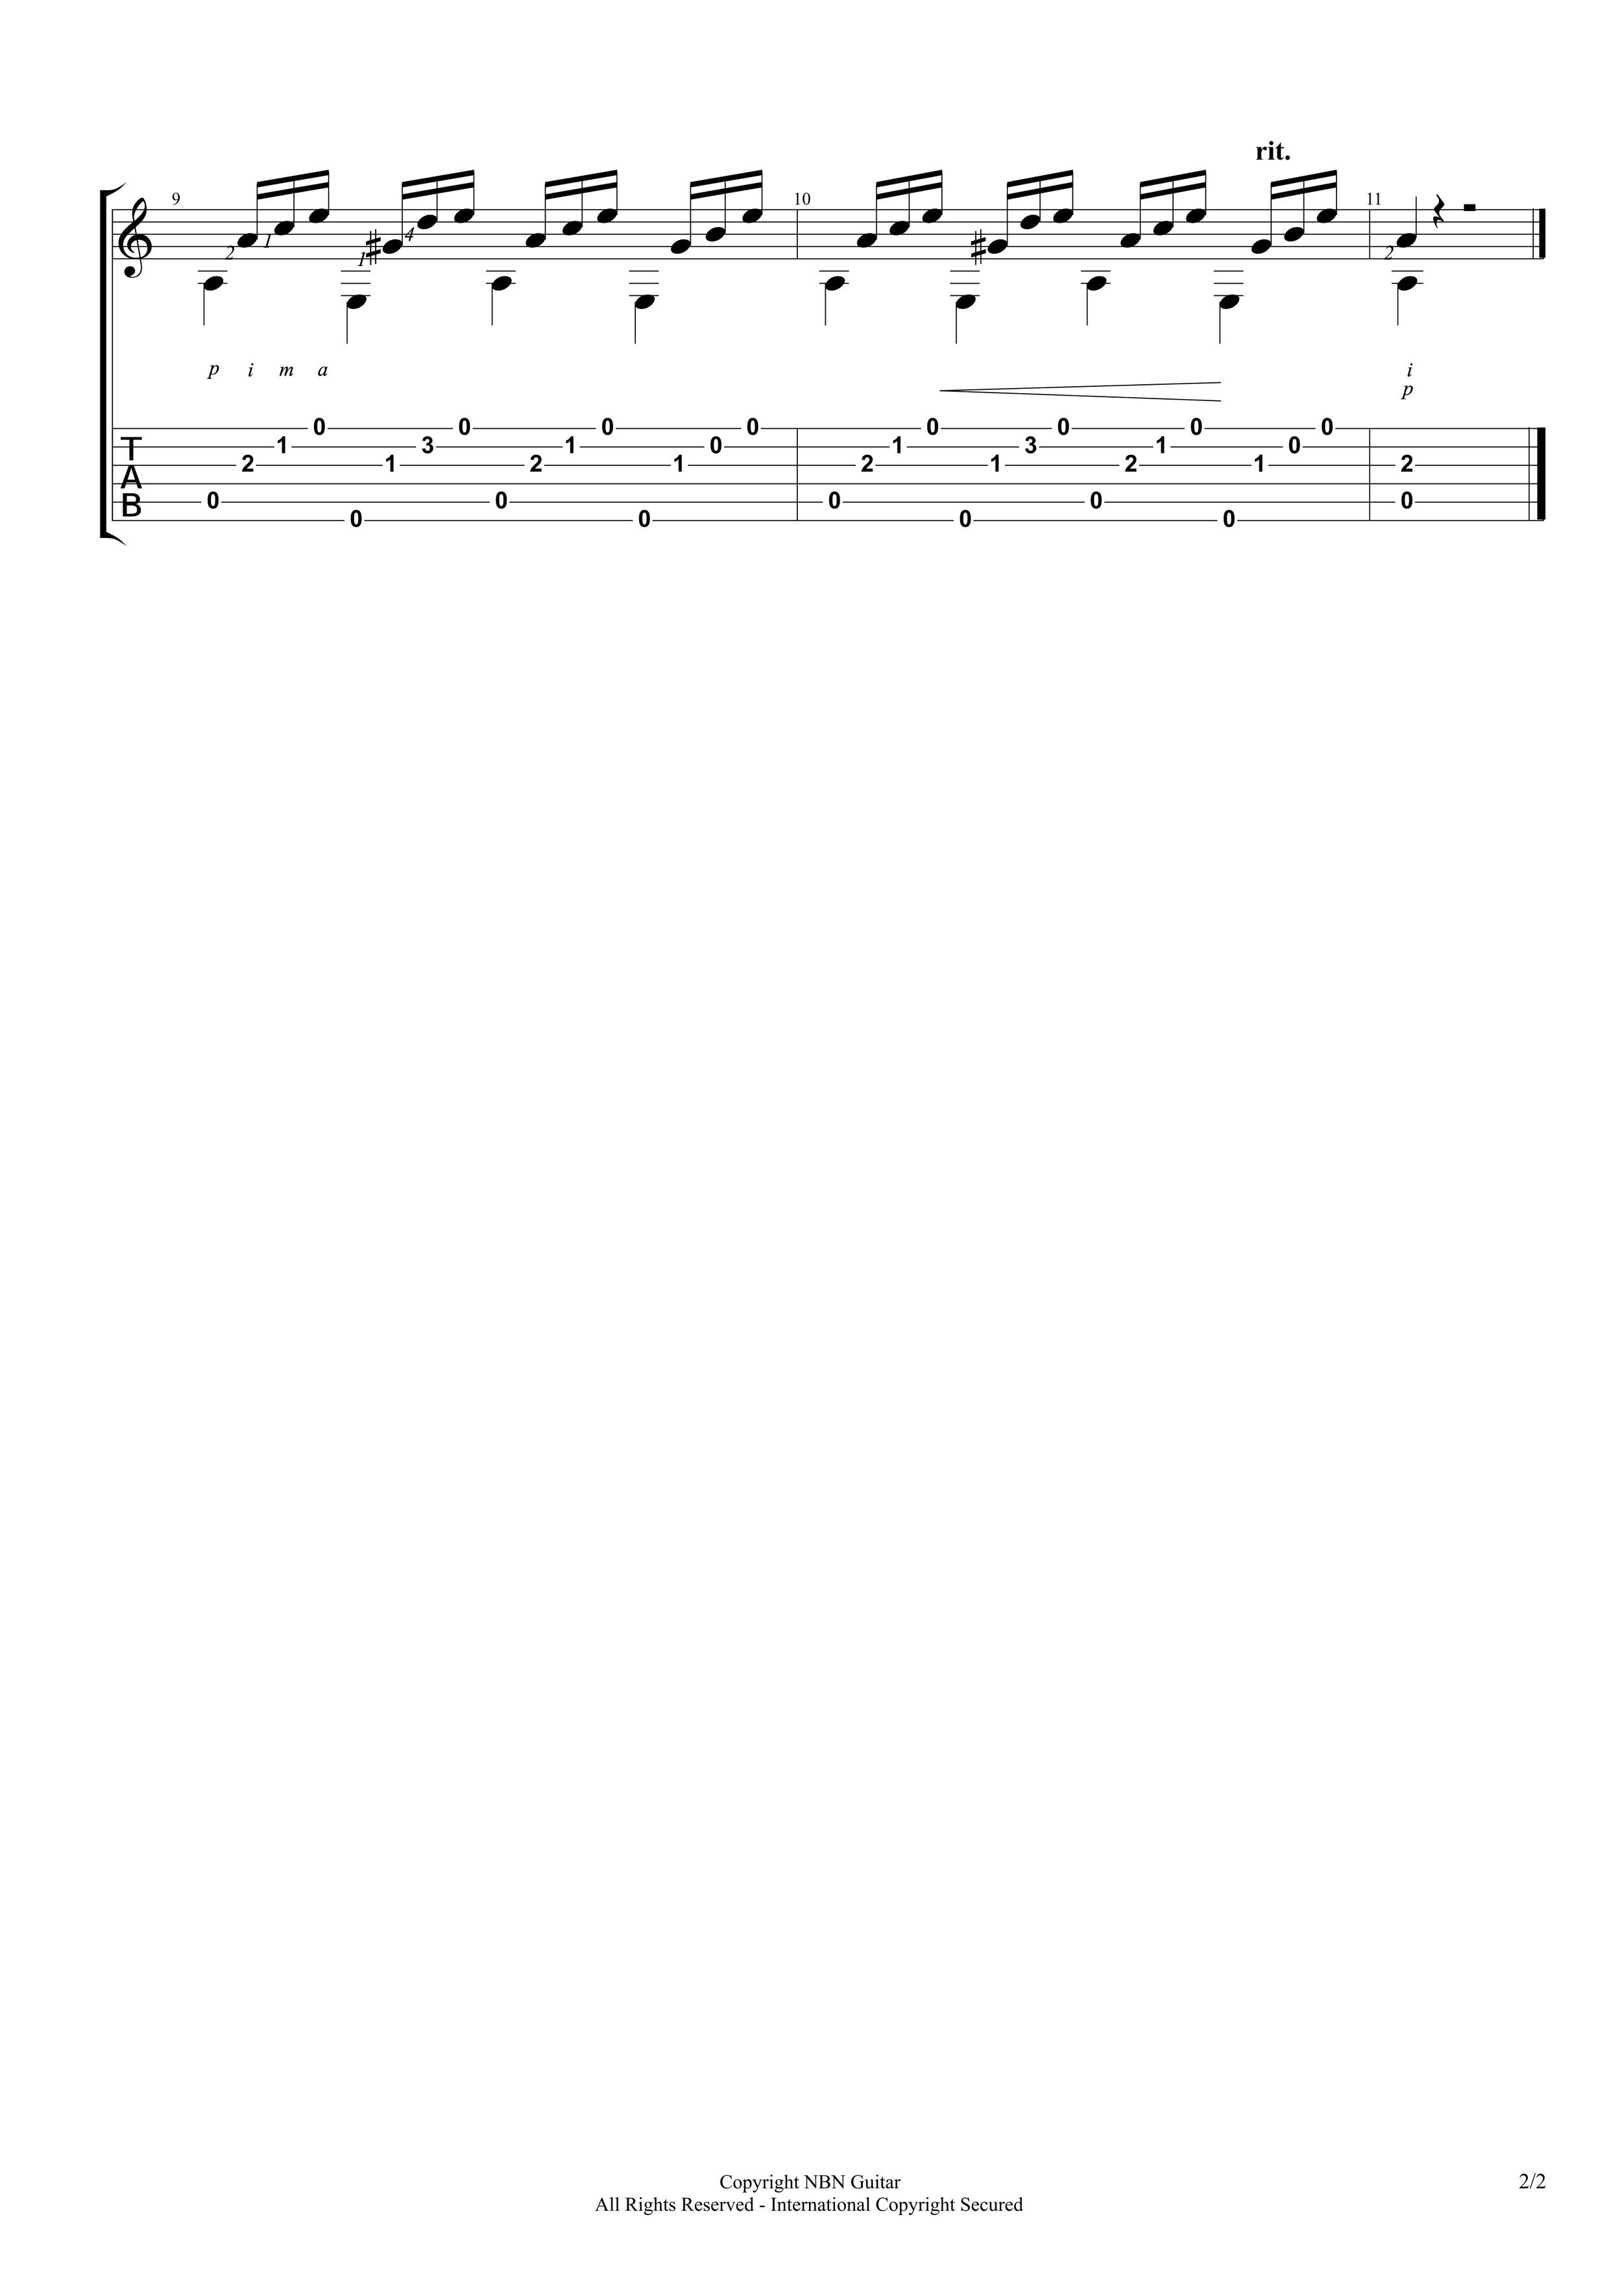 Etude 'Allegro' Guiliani (Sheet Music & Tabs)-p4.jpg